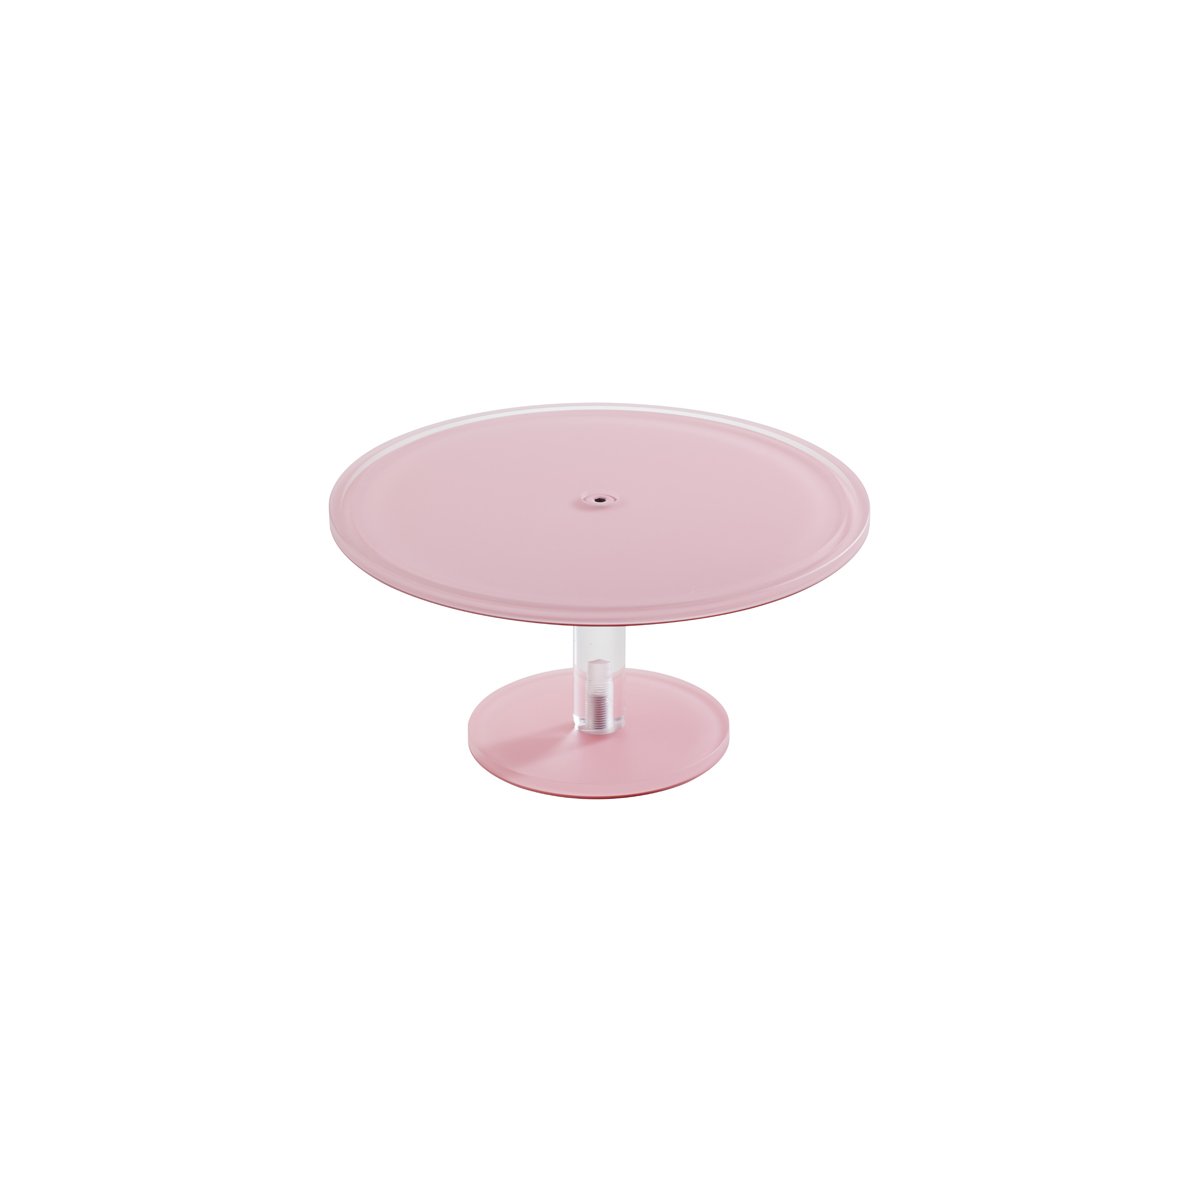 MLP119831 Mealplak Pedestal Cake Stand Pink 300x160mm Tomkin Australia Hospitality Supplies